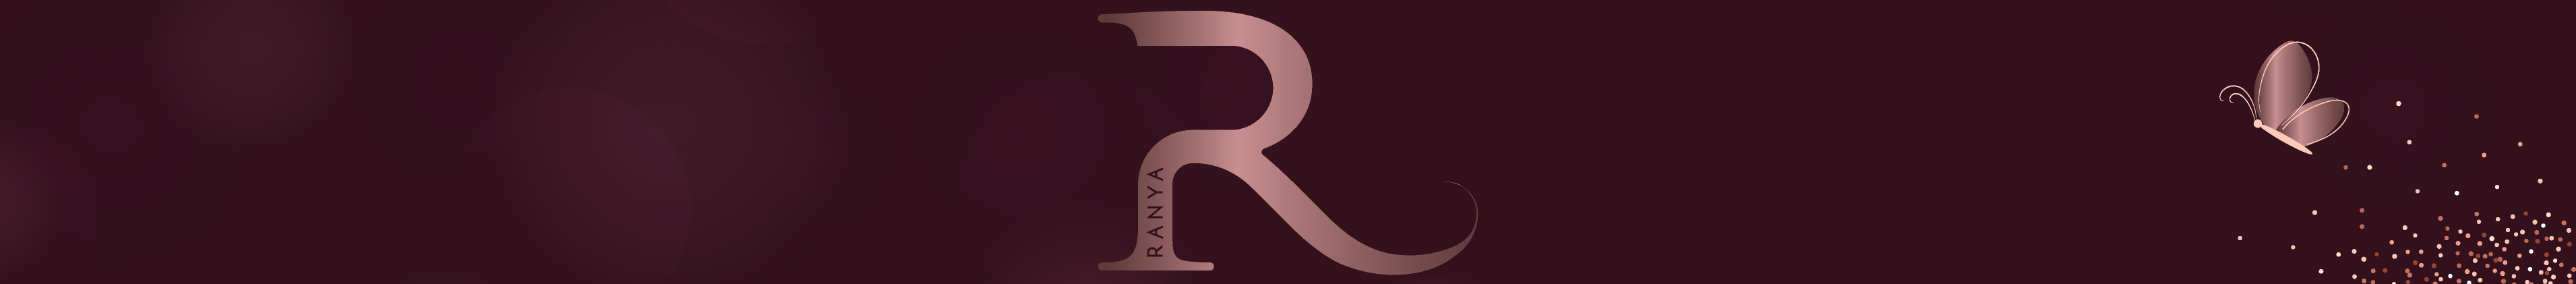 Ranya Refaat のプロファイルバナー